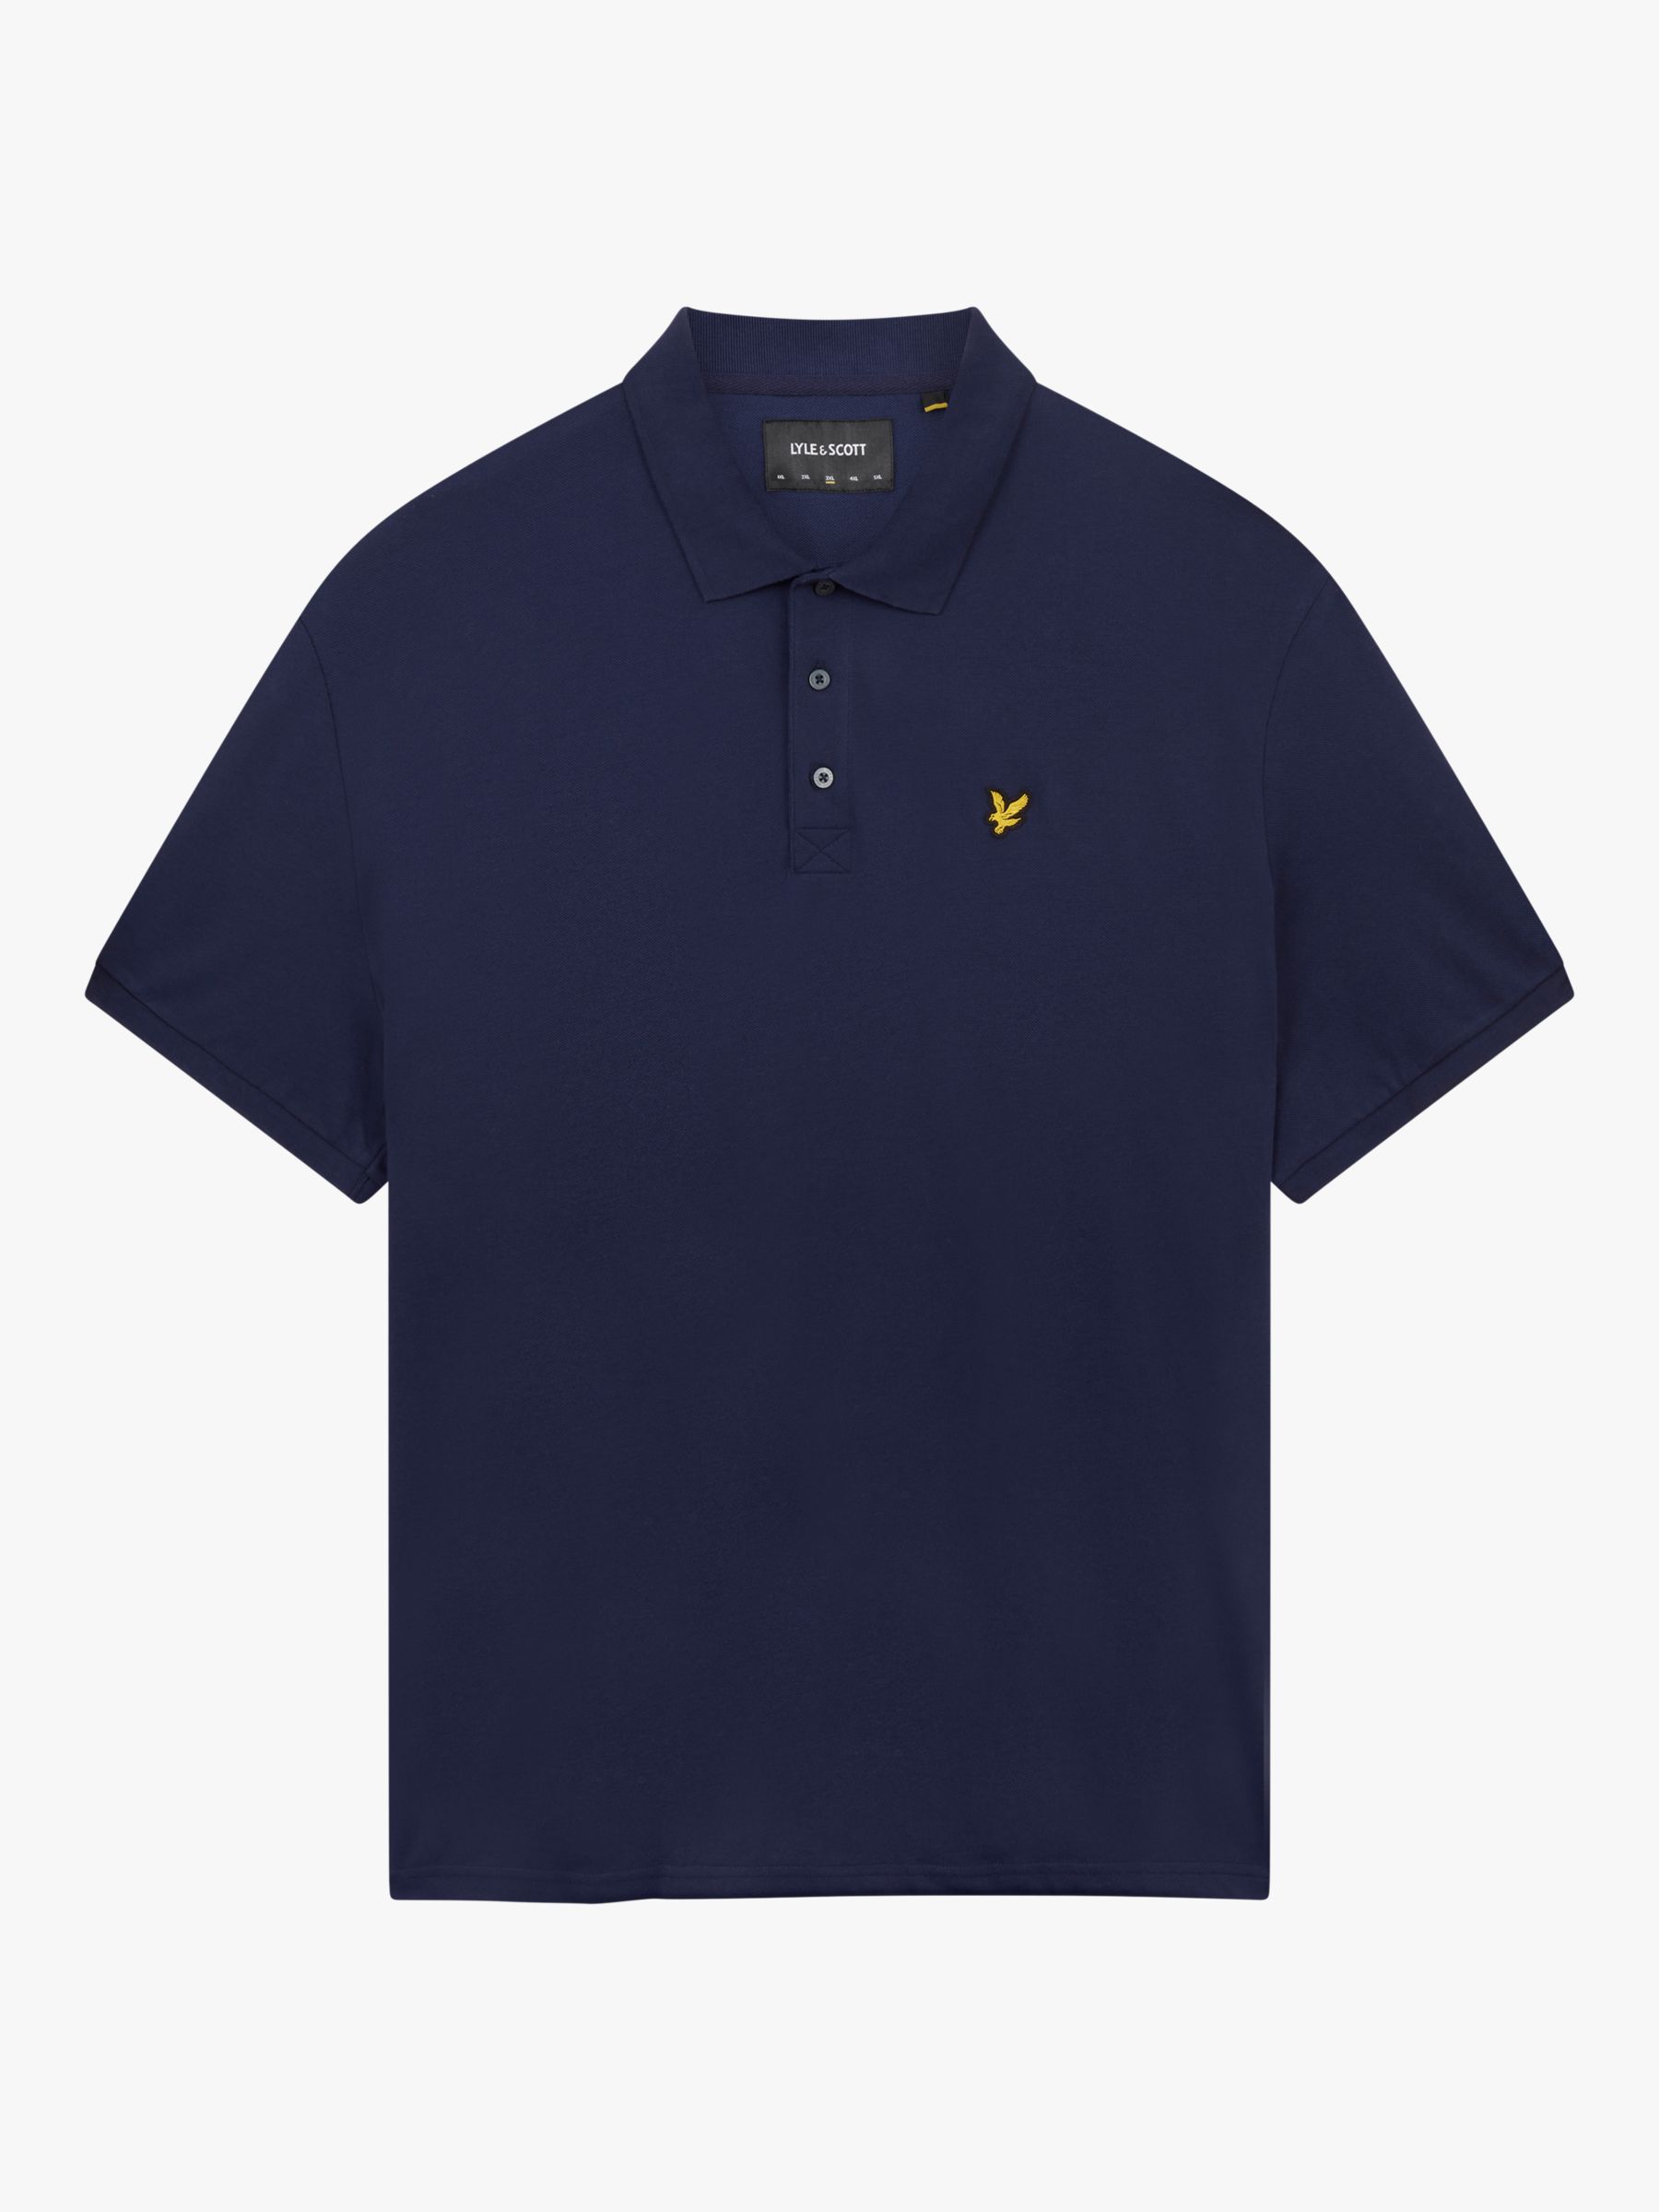 Lyle & Scott Short Sleeve Polo Shirt, Navy at John Lewis & Partners